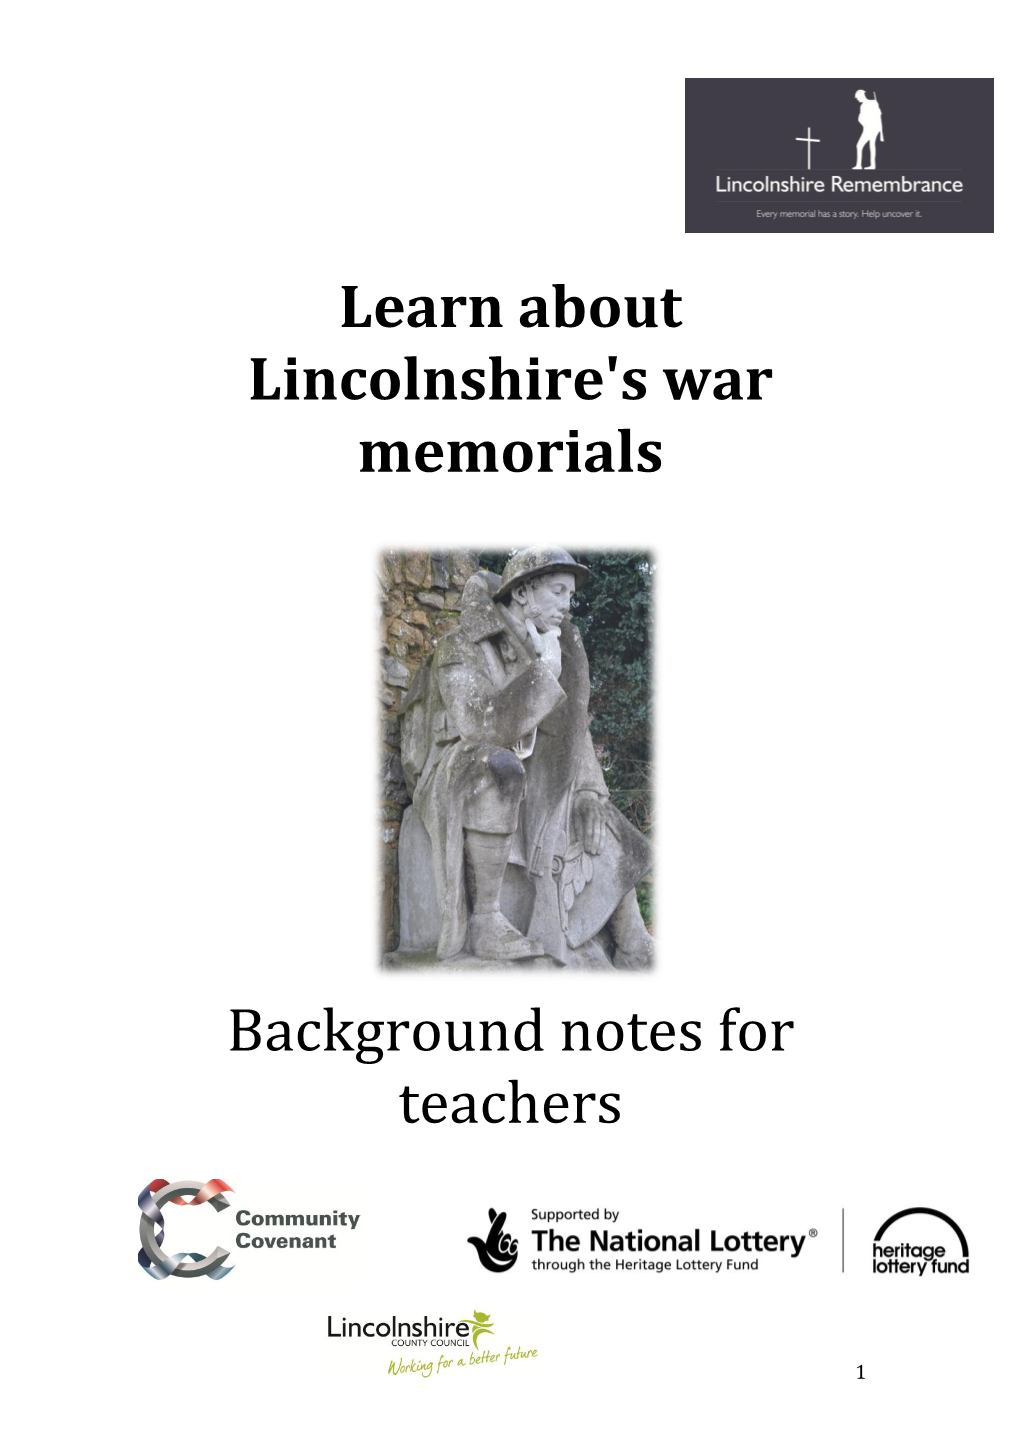 Learn About Lincolnshire's War Memorials Teacher Notes